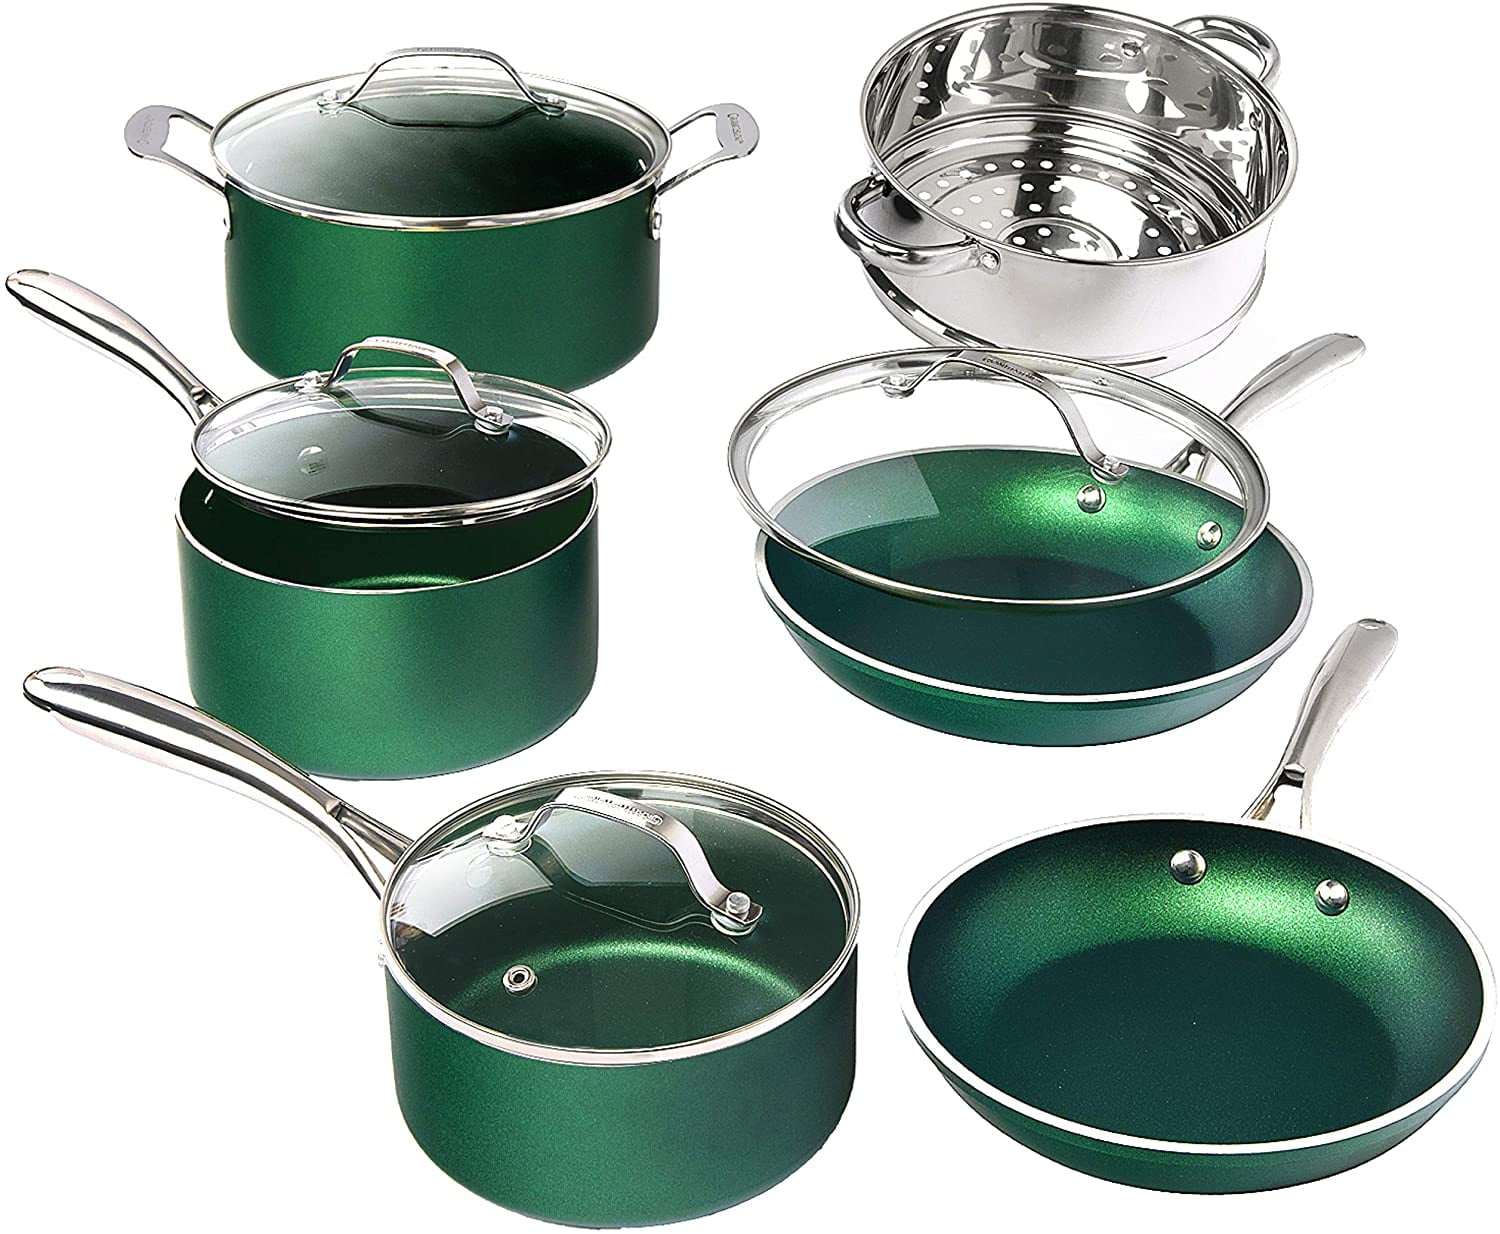 Emerald Titanium Coated Cookware Set - 10 Pieces – Top Tiles Home